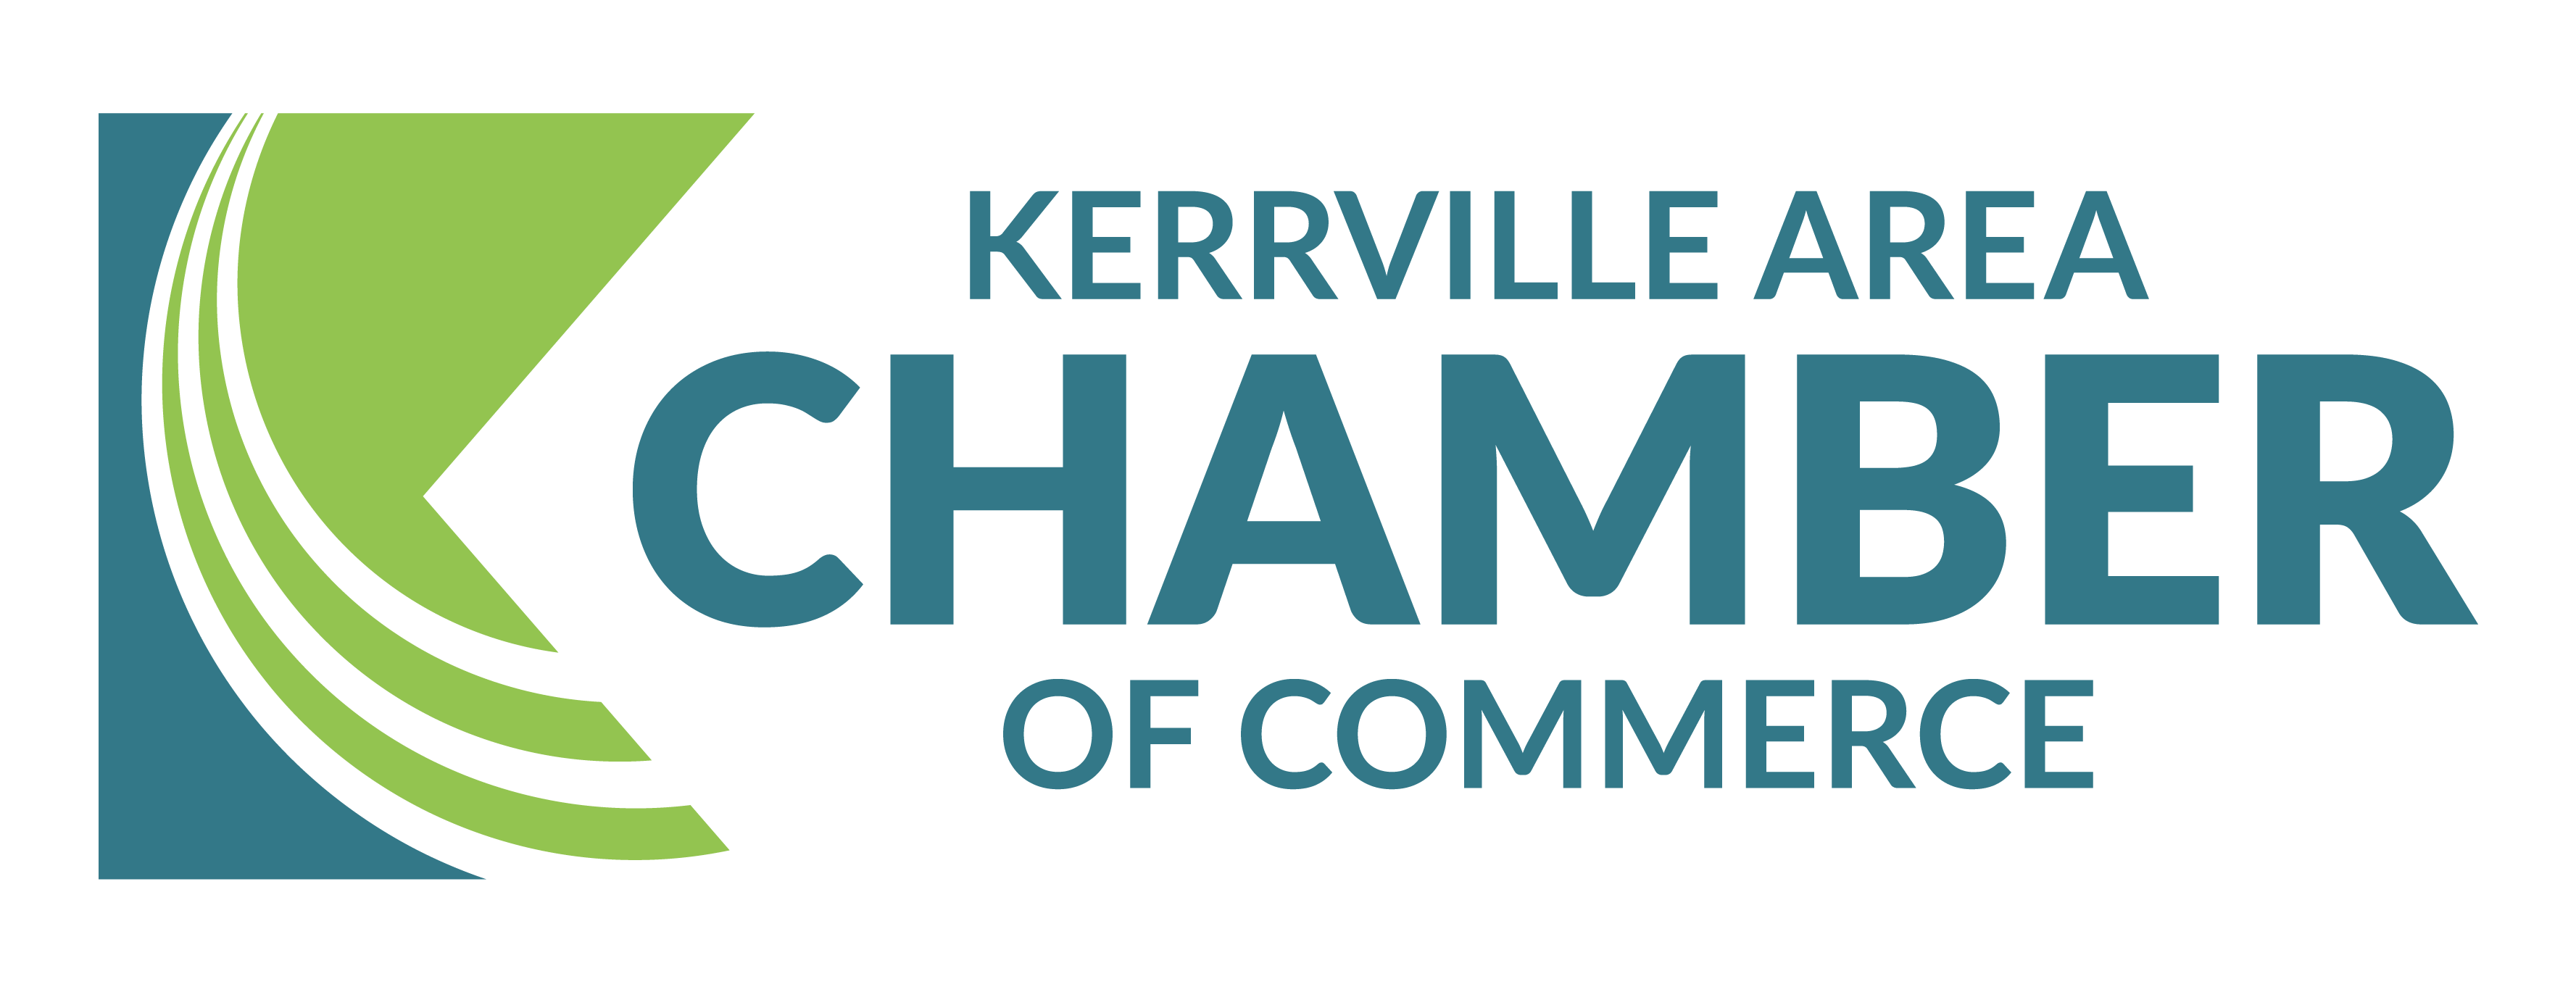 Kerrville Area Chamber of Commerce_Logo